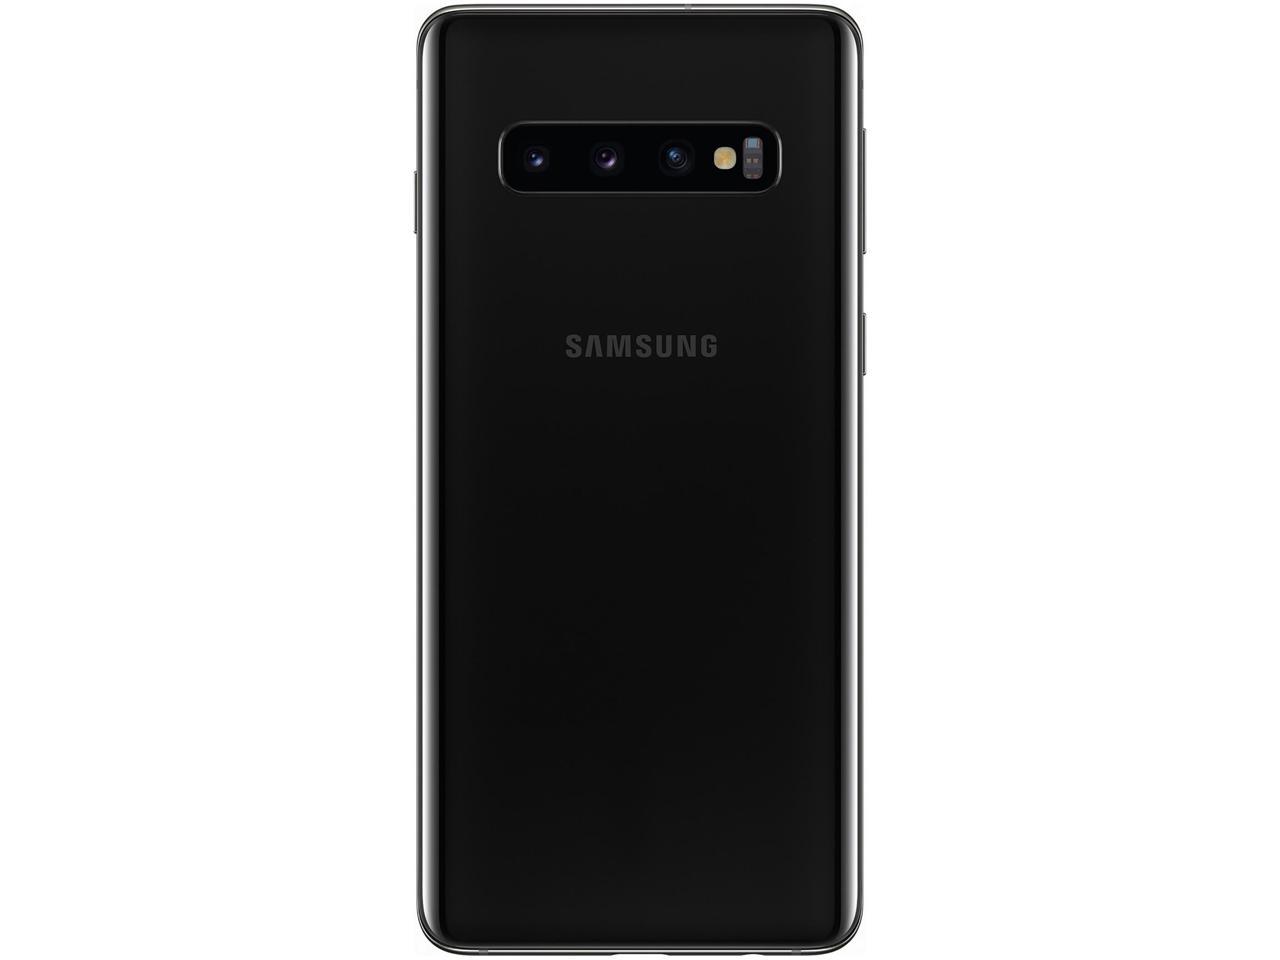 Samsung Galaxy S10 G973 128GB Unlocked GSM LTE Phone with Triple 12 MP + 12 MP + 16 MP Rear Camera - Prism Black (International Version)